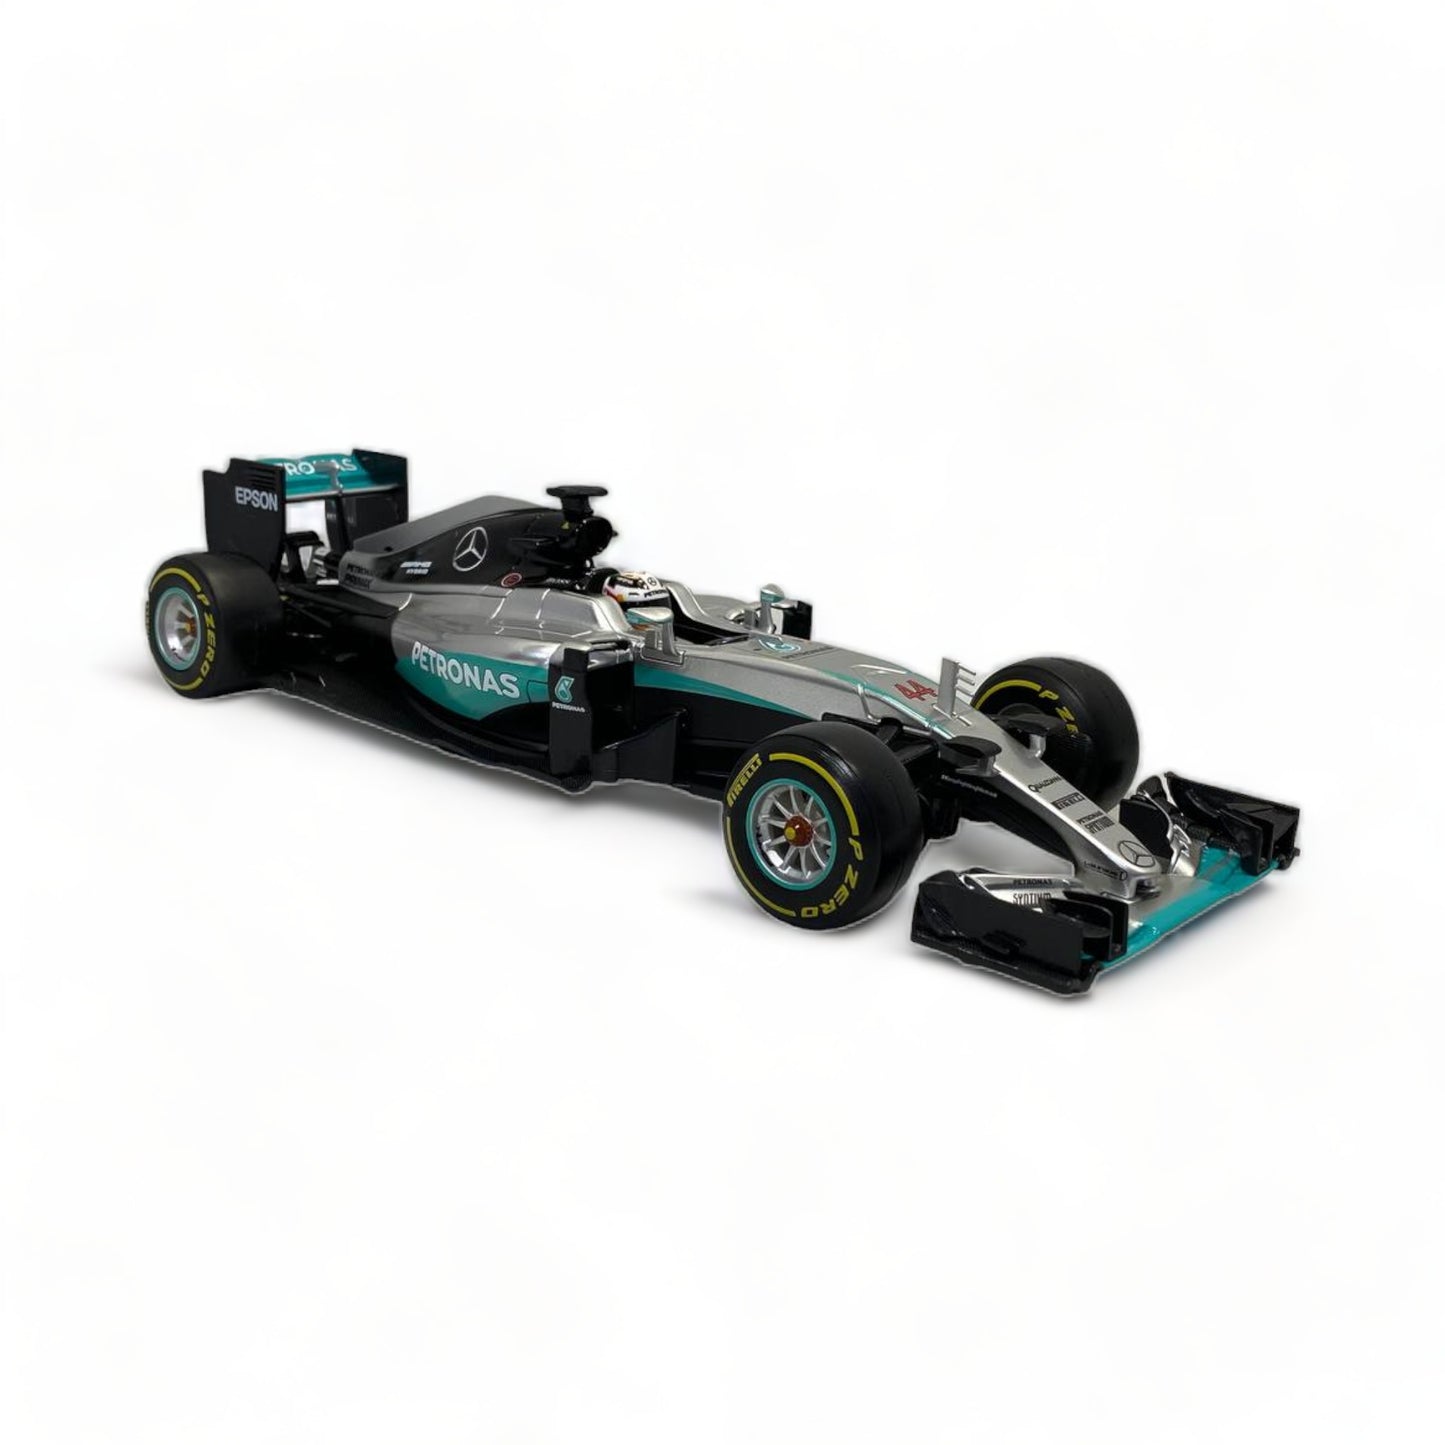 1/18 Diecast Mercedes Petronas F1 WO7 Hybrid Lewis Hamilton #44 Formula 1 Bburago Scale Model Car